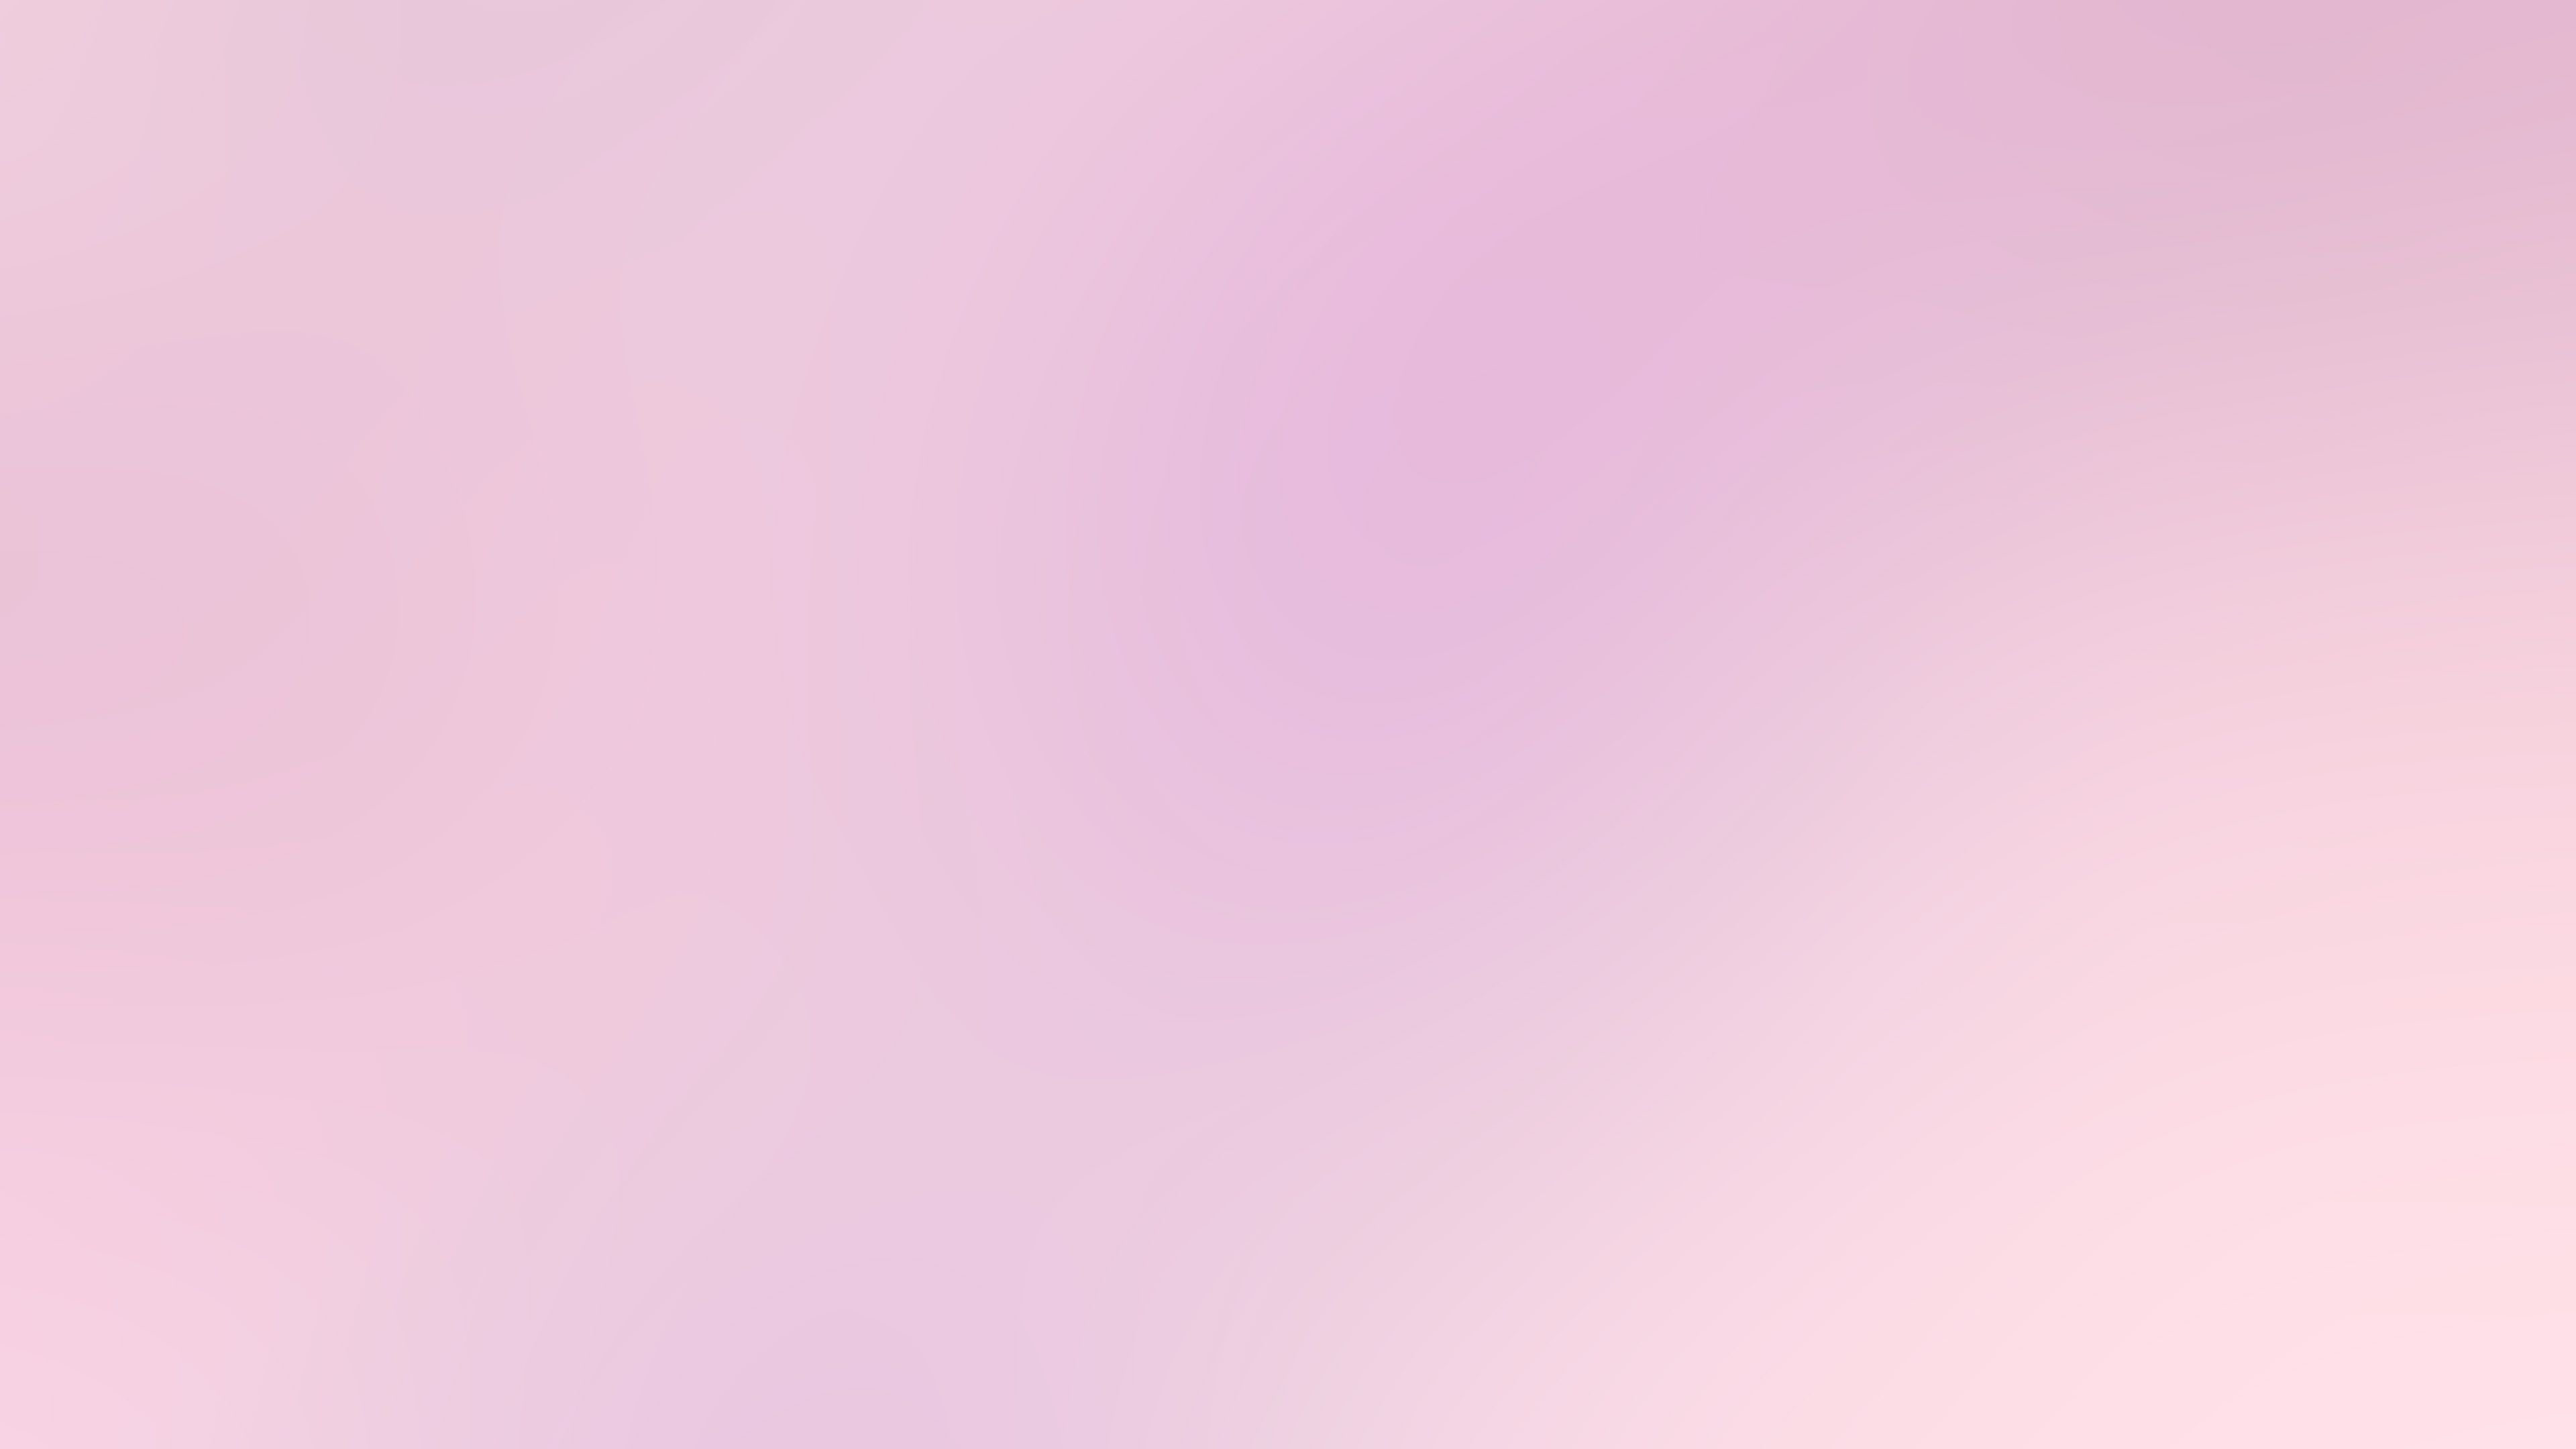 wallpaper for desktop, laptop. soft pink baby gradation blur